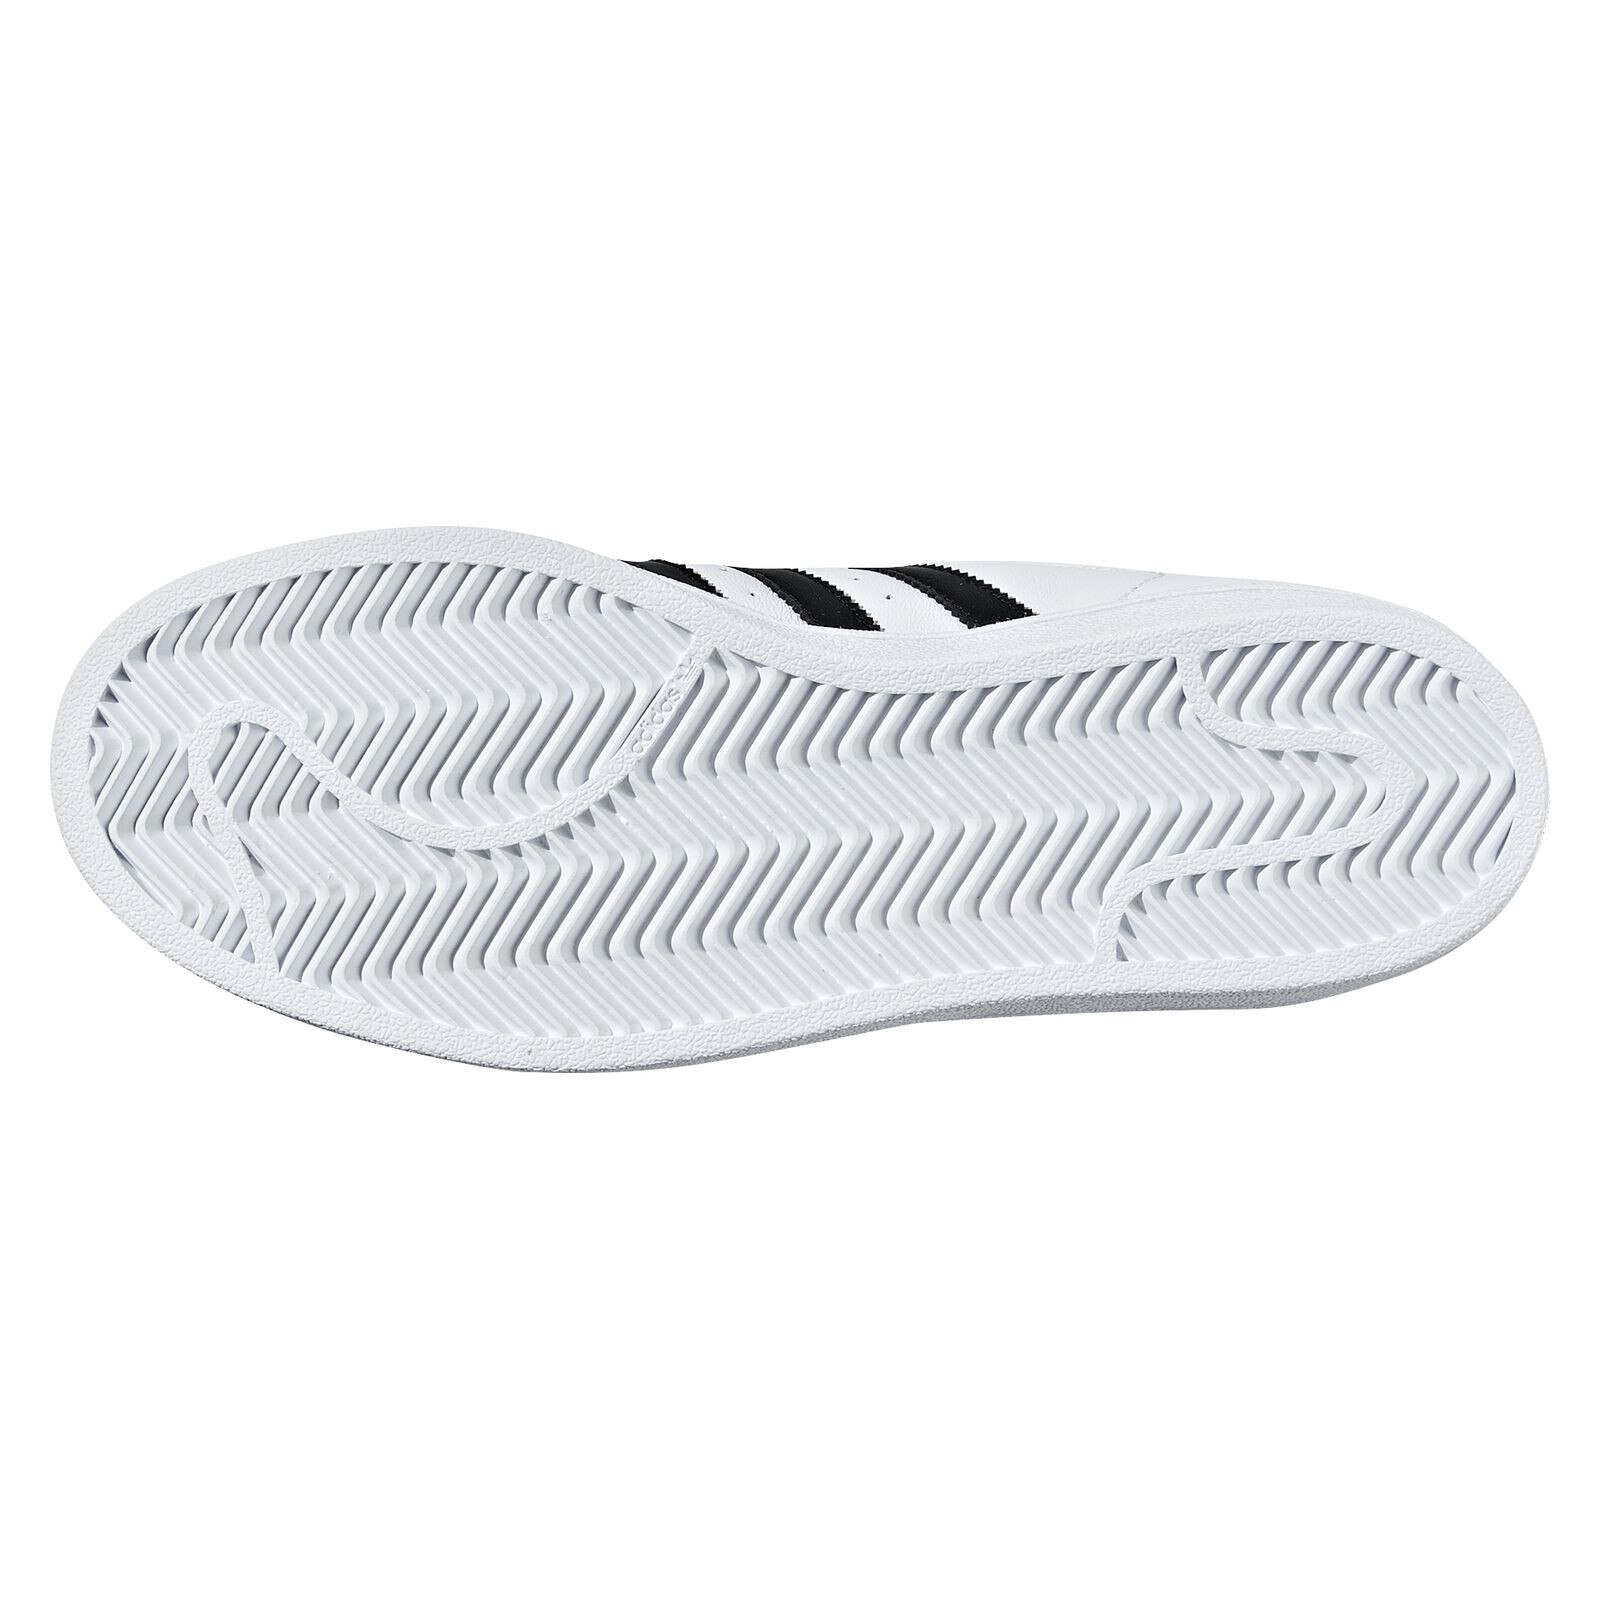 Props leakage be impressed Pantofi sport Adidas SUPERSTAR CM8414 Femei, Alb, 36 - eMAG.ro